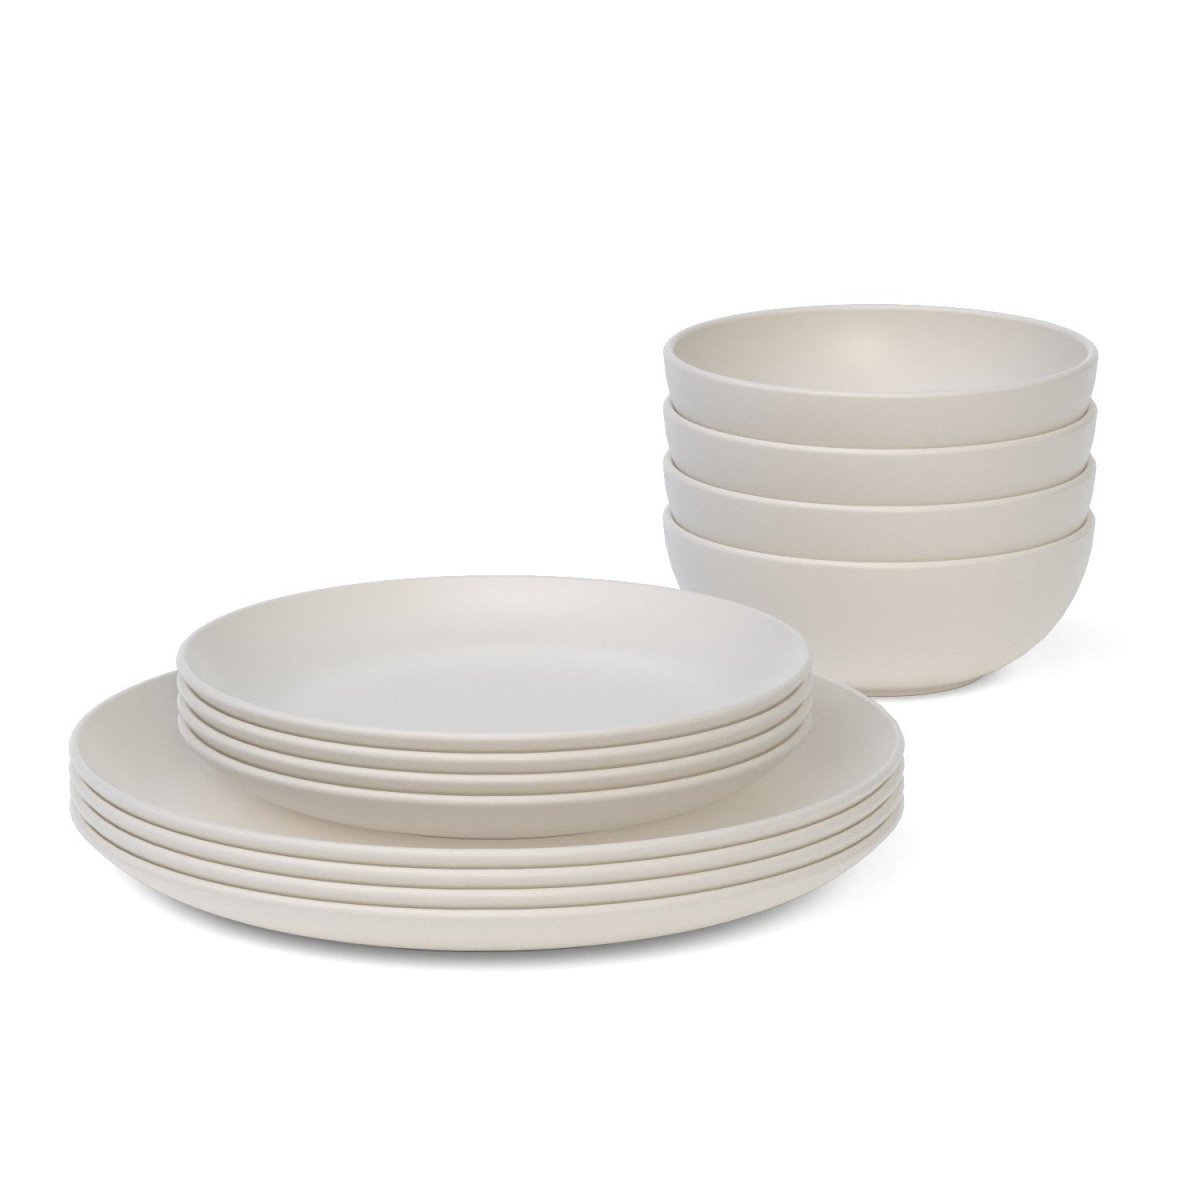 EKOBO 11" Round Dinner Plate, Set of 4 - Off White - lily & onyx